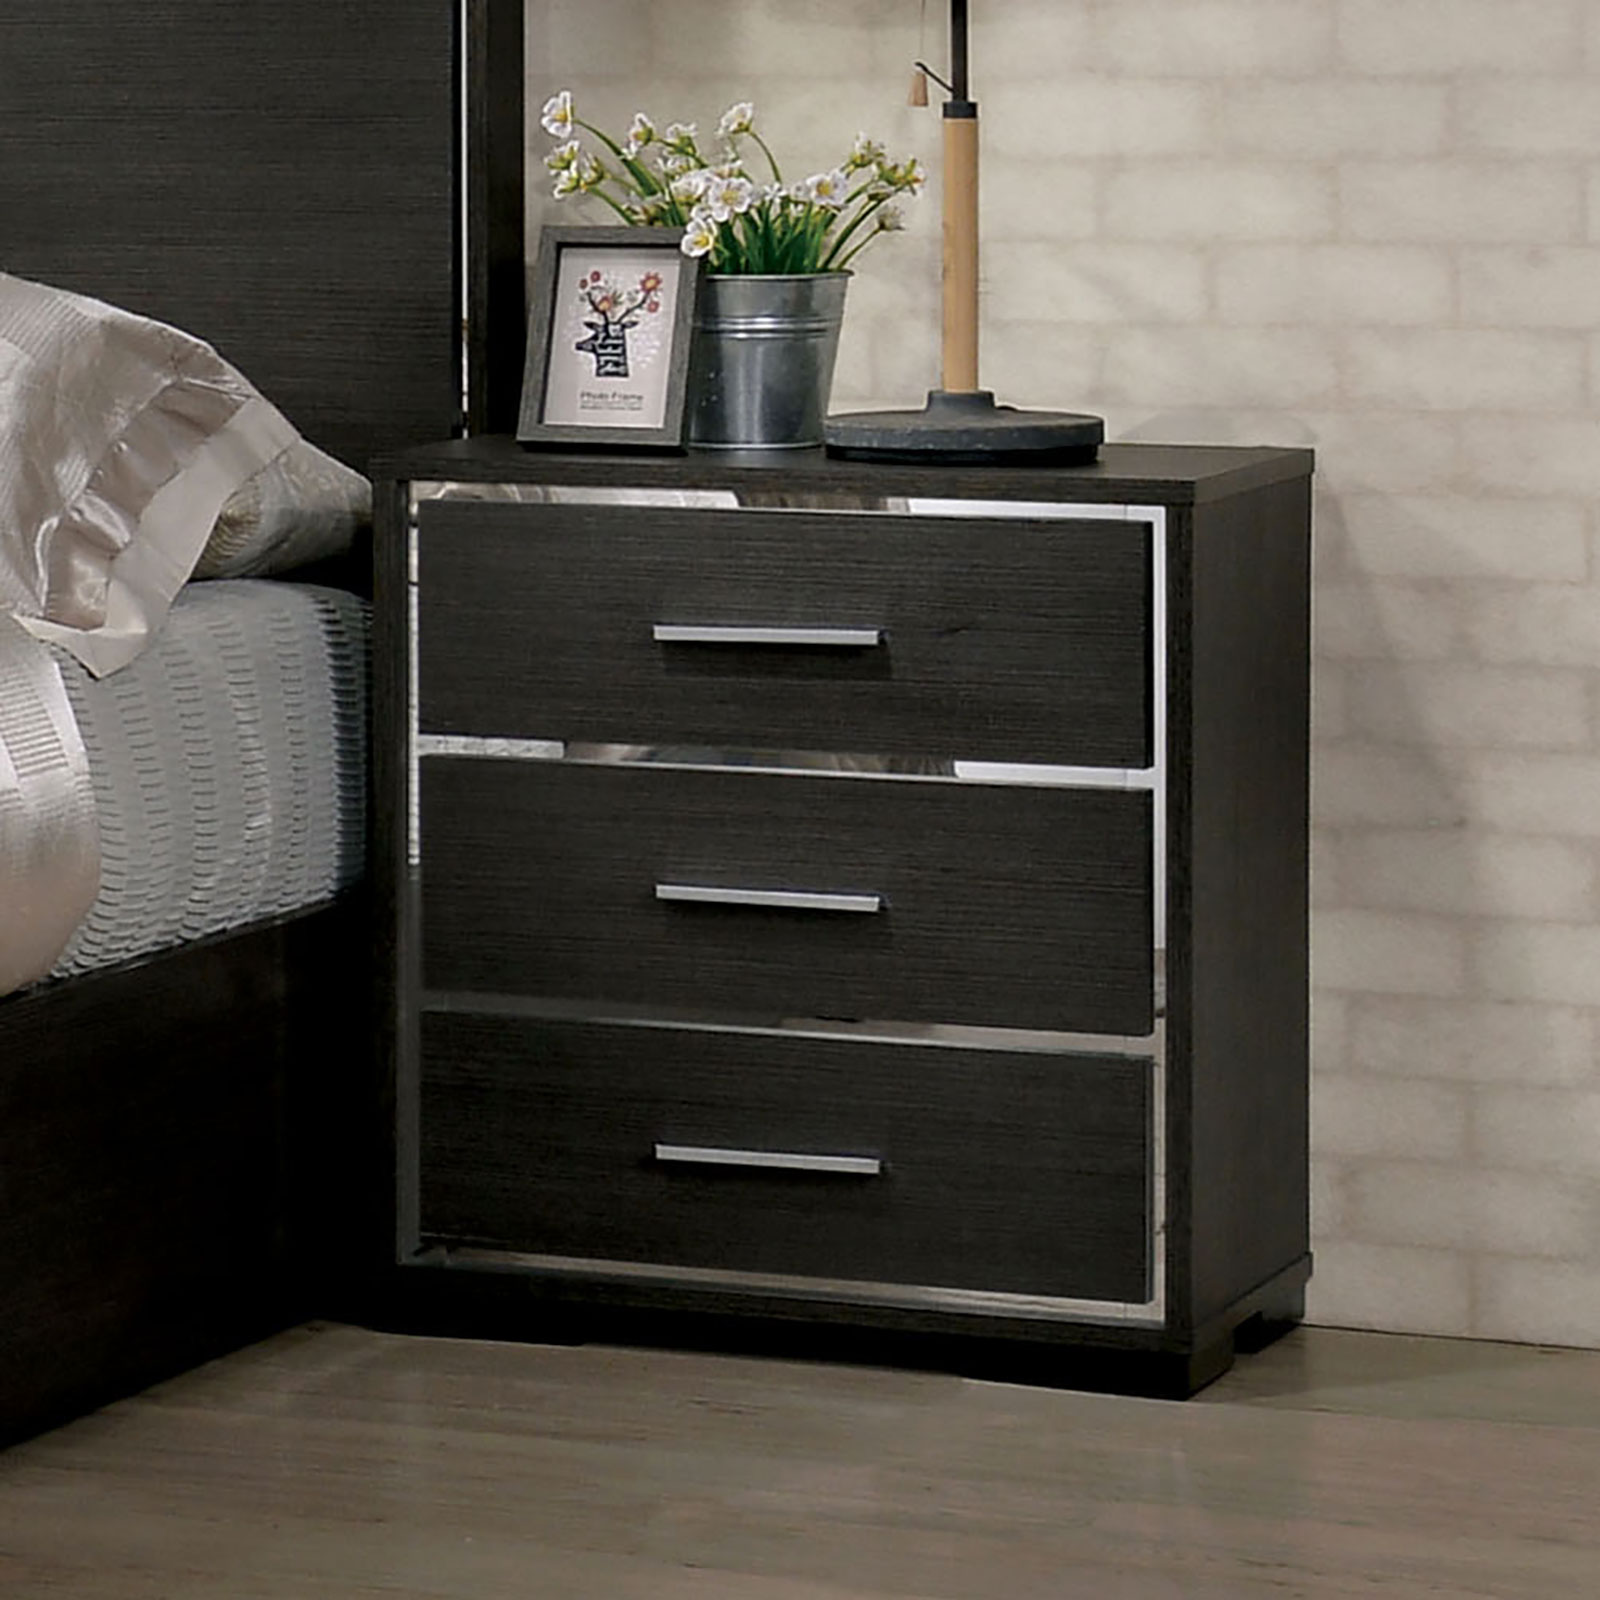 1x Nightstand Solid wood Warm Gray Sleek Modern Lines Chrome Trim Insert Contemporary Bedroom Furniture-Boyel Living